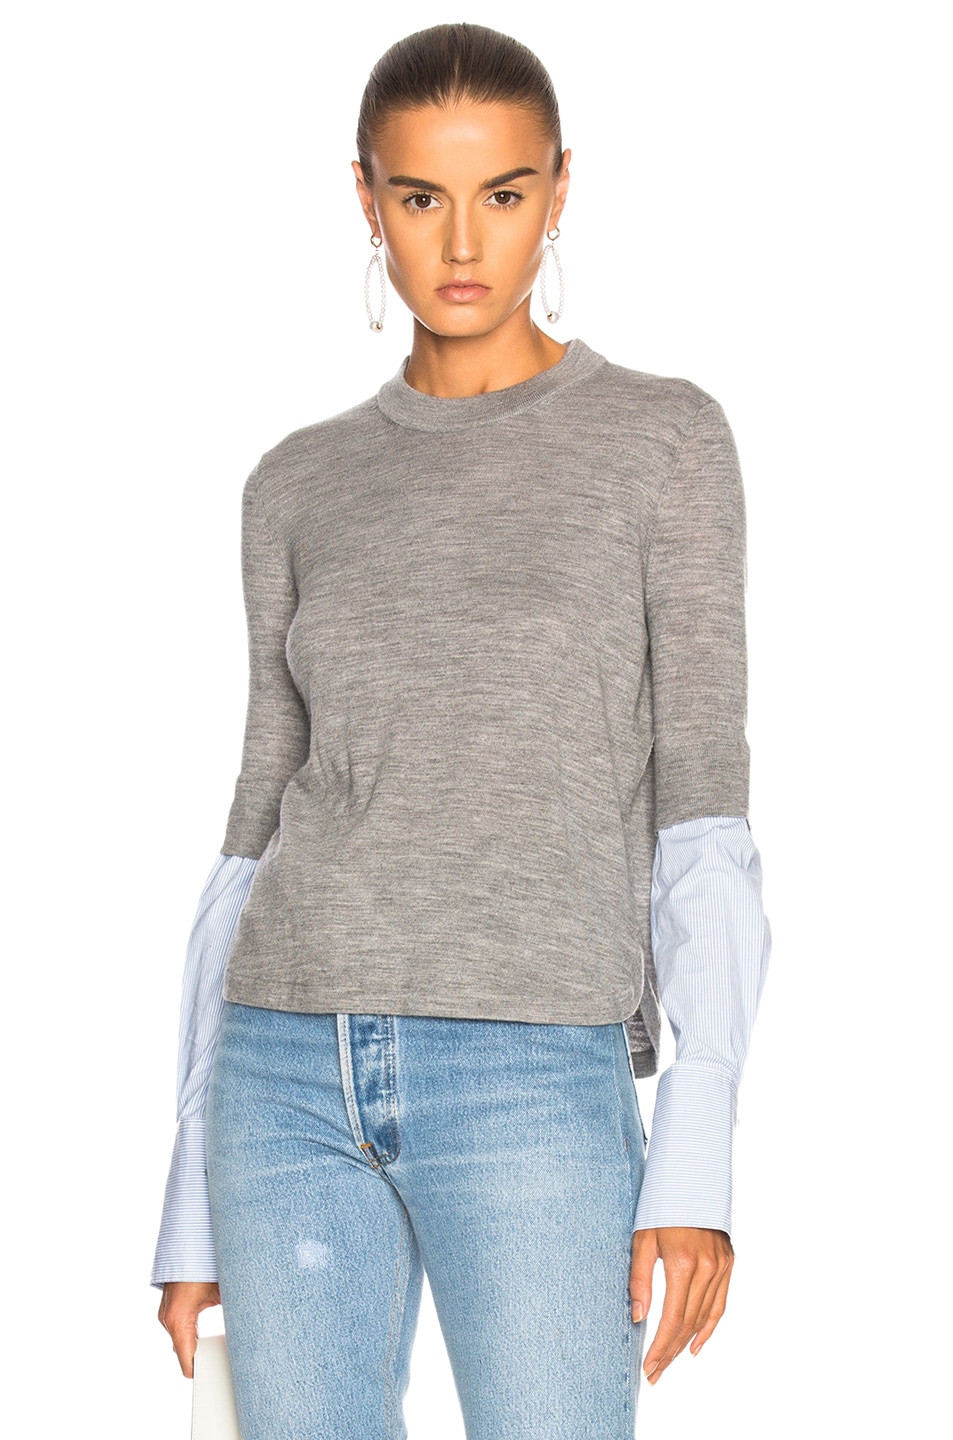 Image 1 of Veronica Beard Roscoe Mixed Media Sweater in Grey & Light Blue Stripe